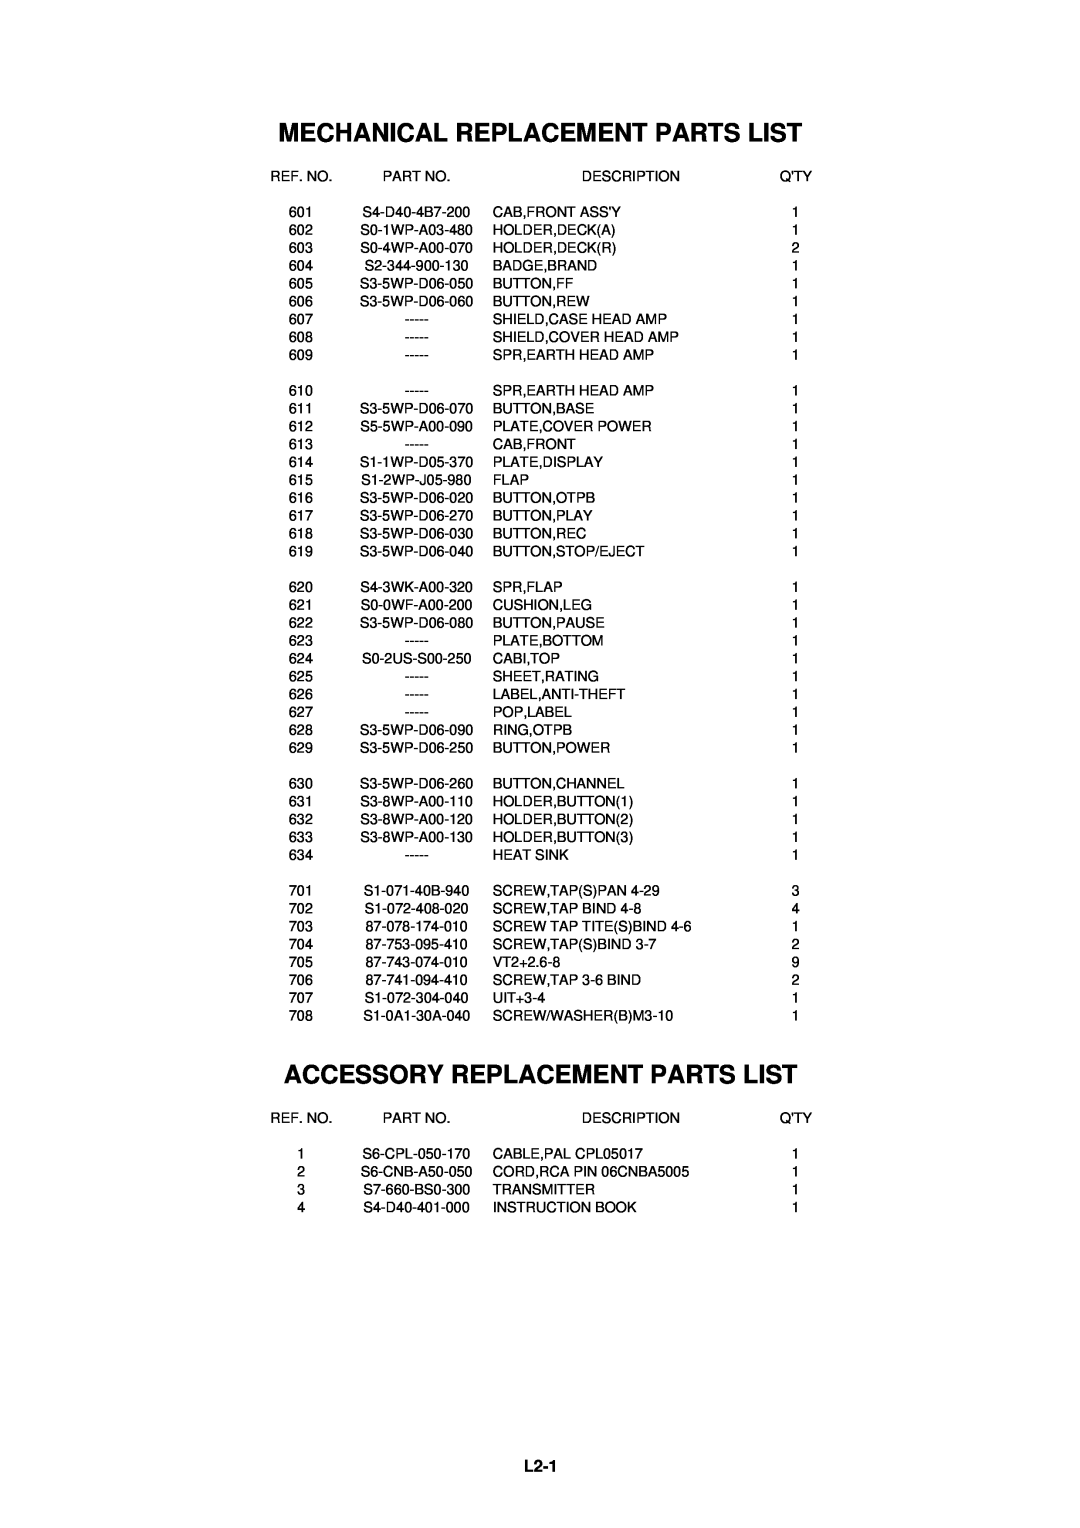 Aiwa HV-FX5100 service manual Mechanical Replacement Parts List, Accessory Replacement Parts List, L2-1 